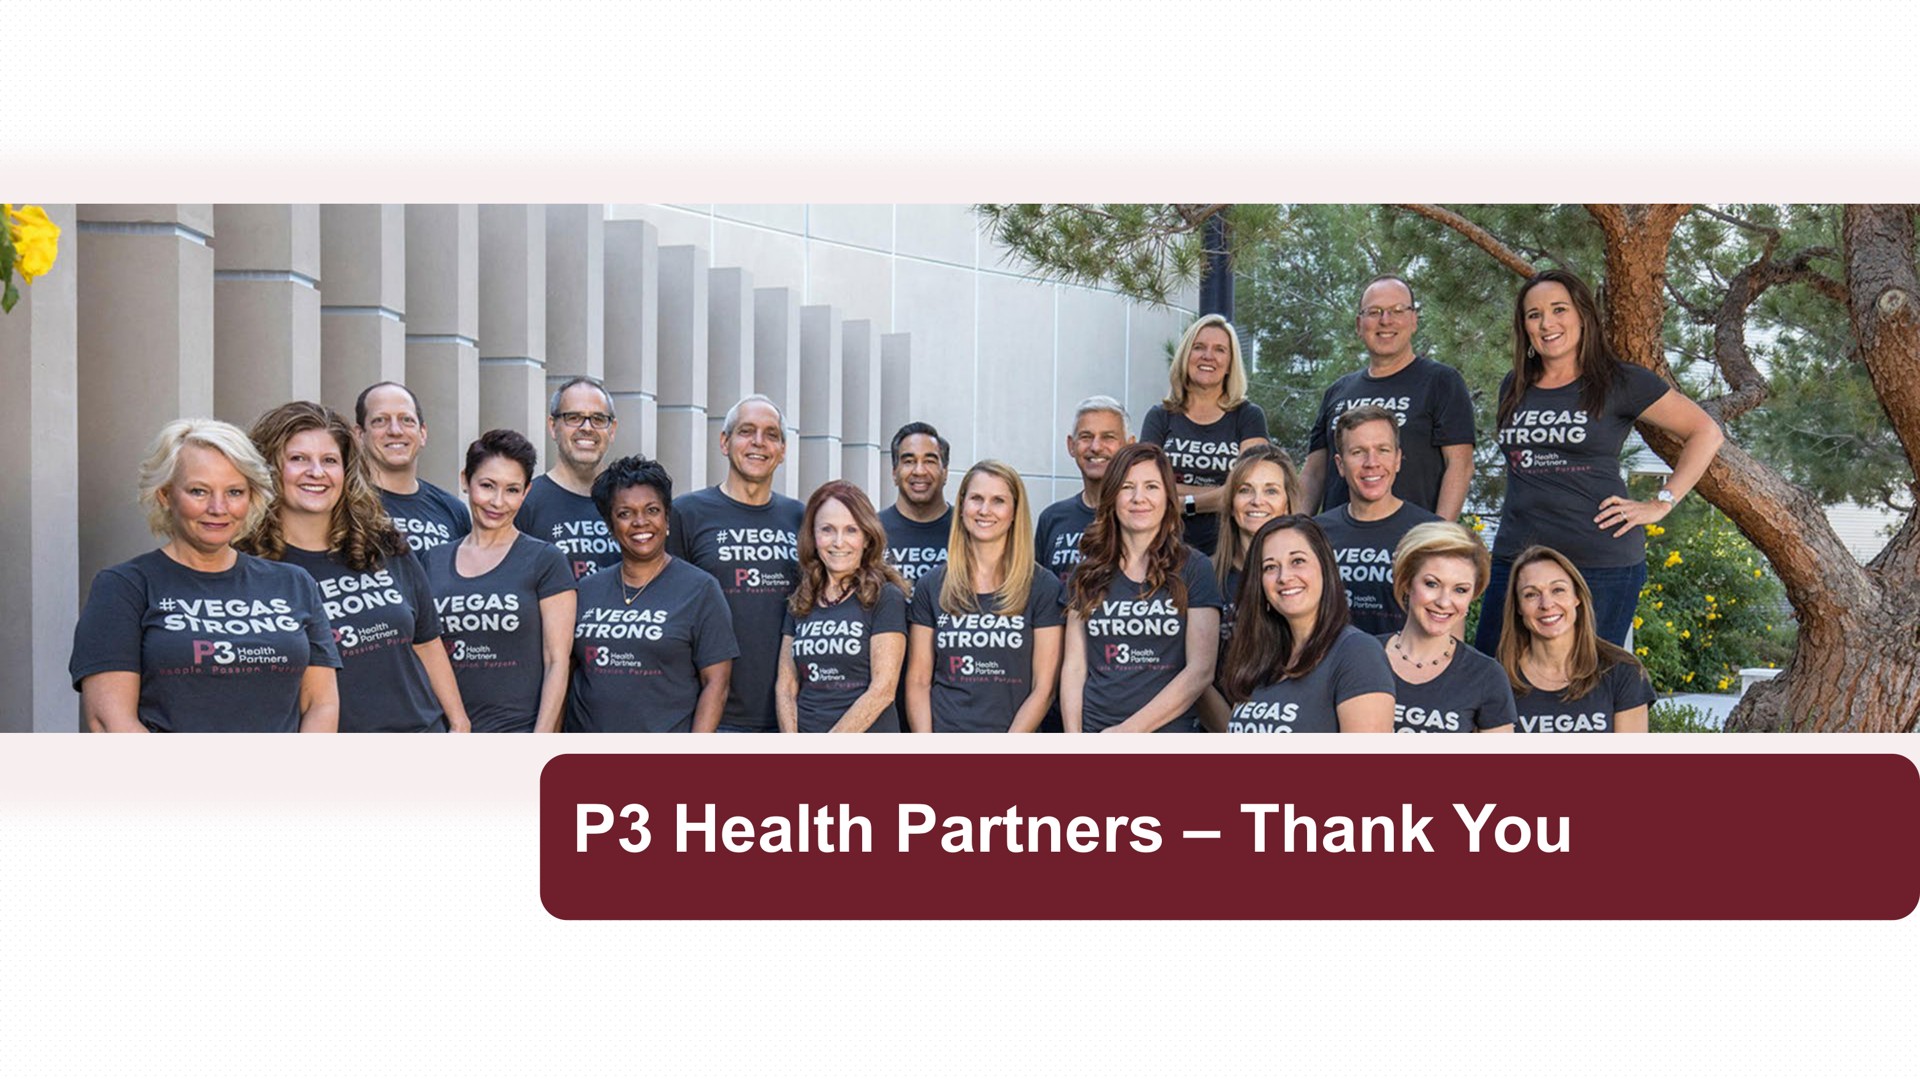 health partners thank you | P3 Health Partners